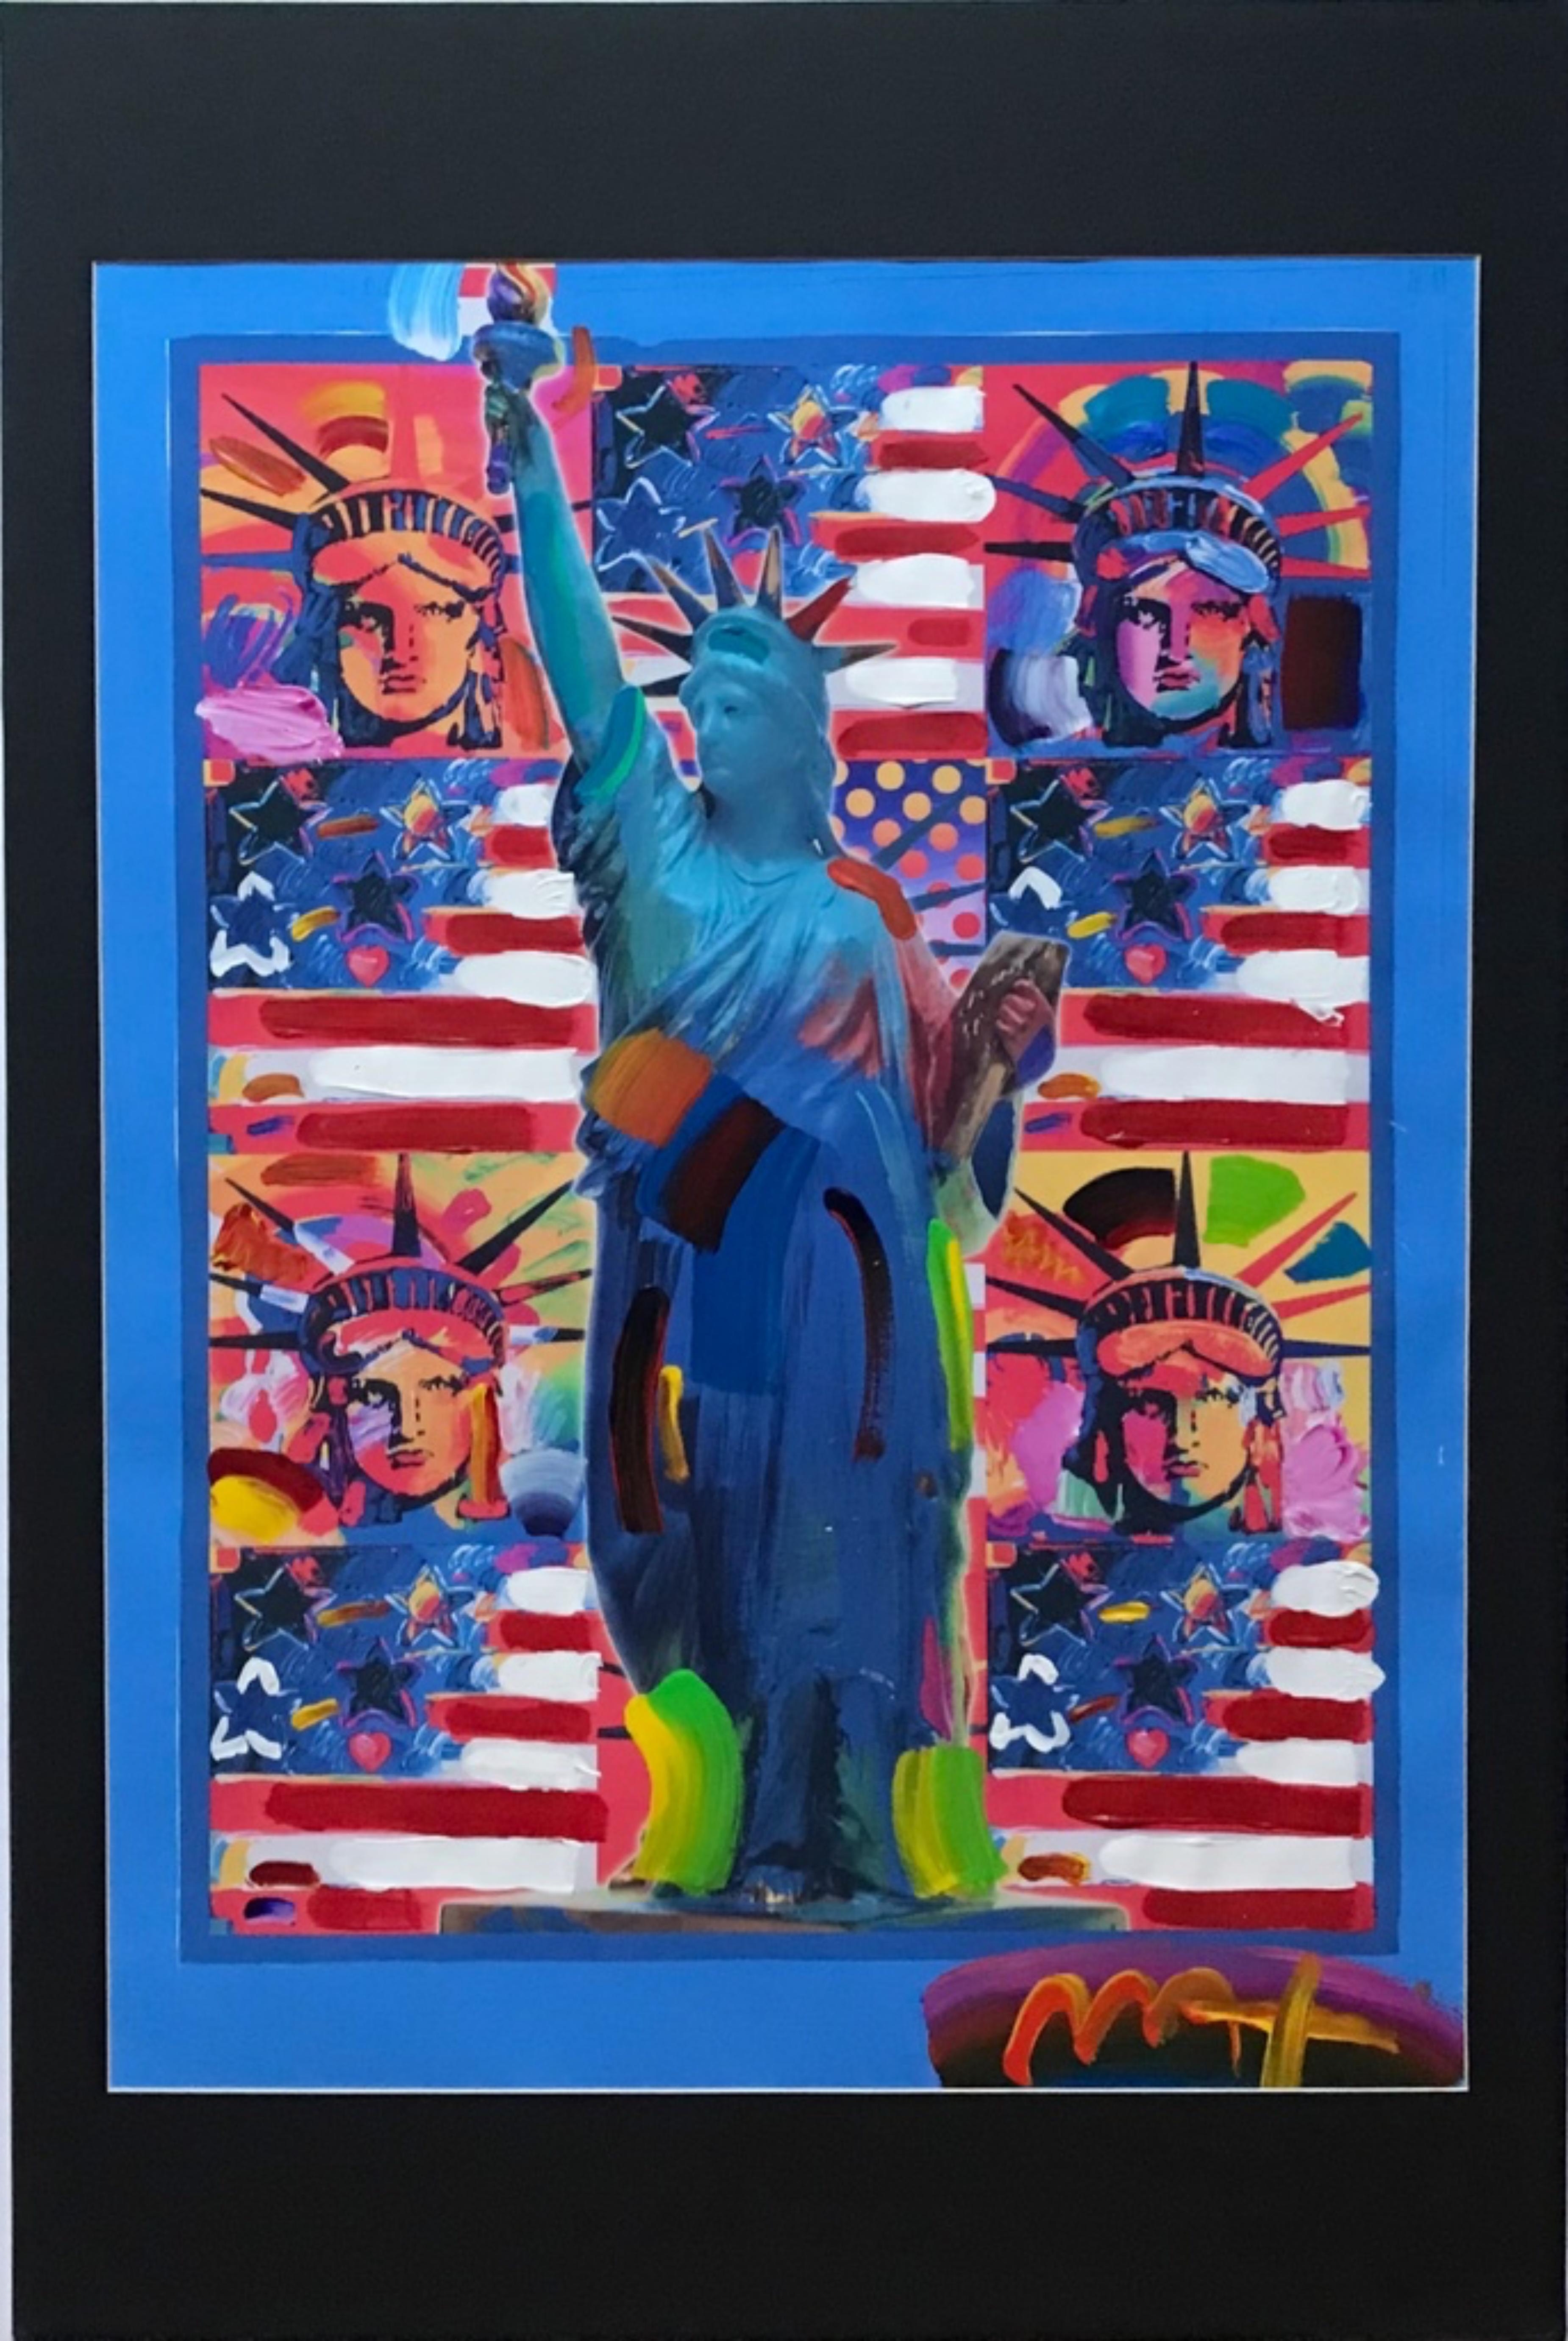 God Blessing America II peinture unique (signée deux fois) avec Statue de la Liberté - Pop Art Mixed Media Art par Peter Max